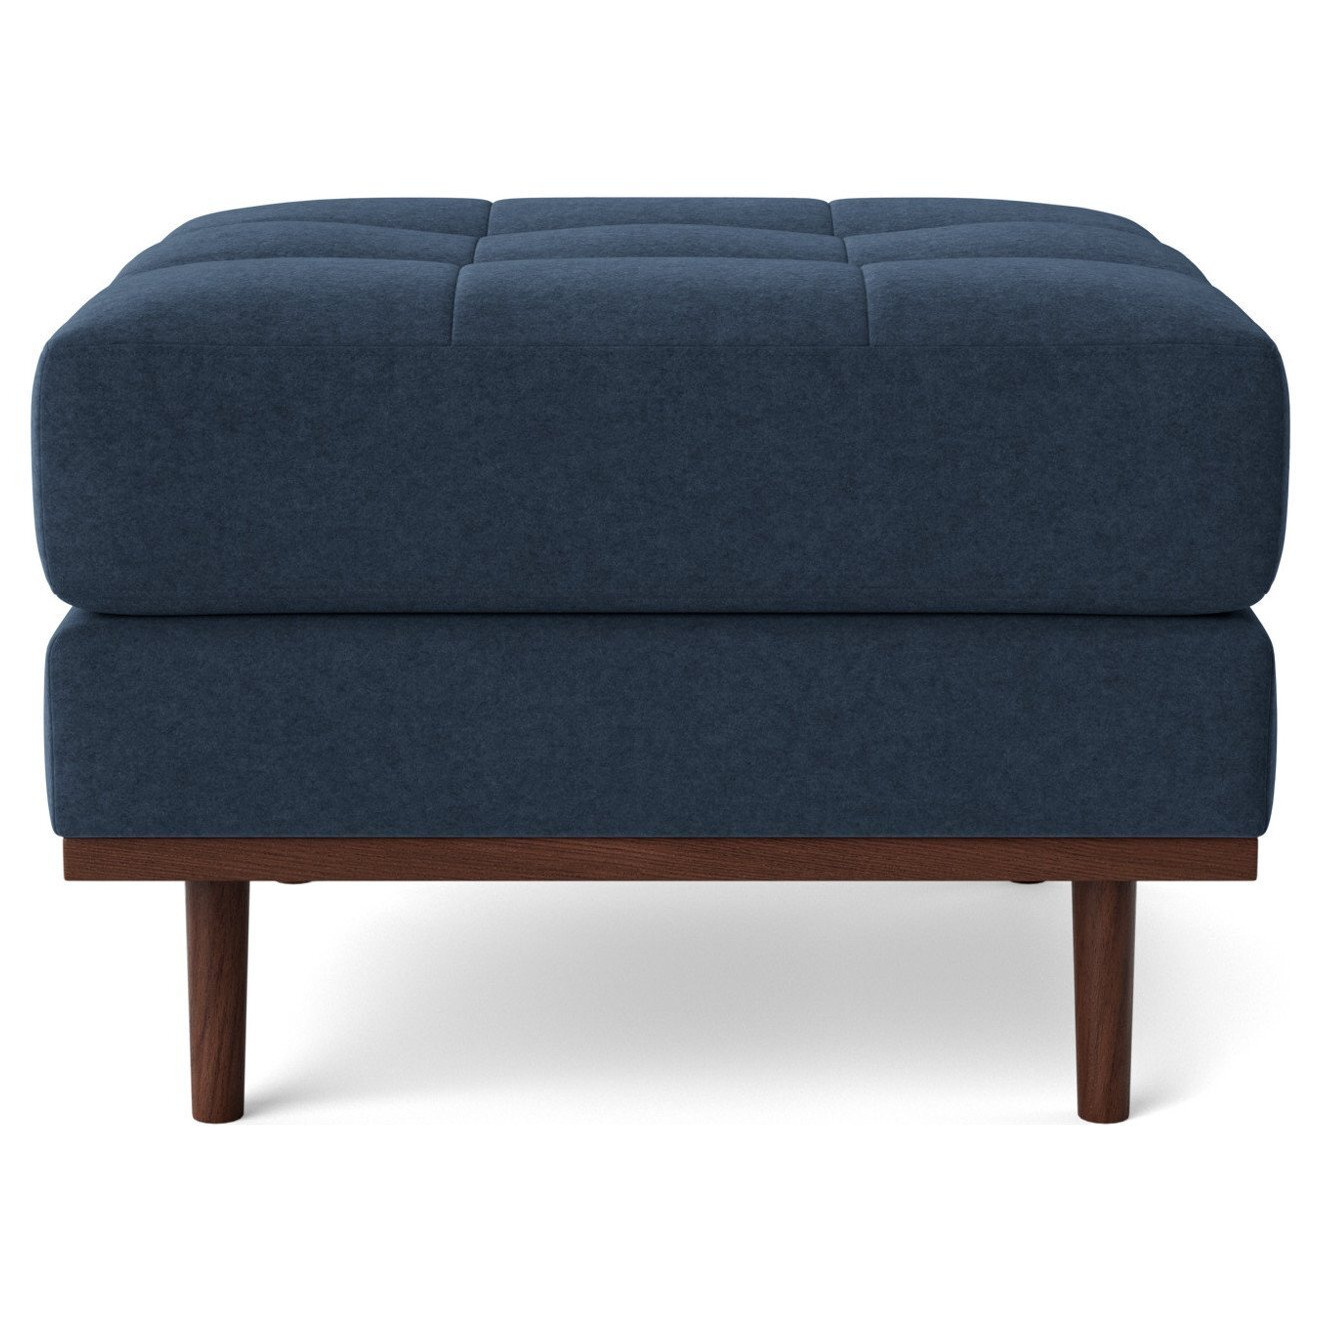 Swoon Berlin Fabric Ottoman Footstool - Indigo Blue - image 1